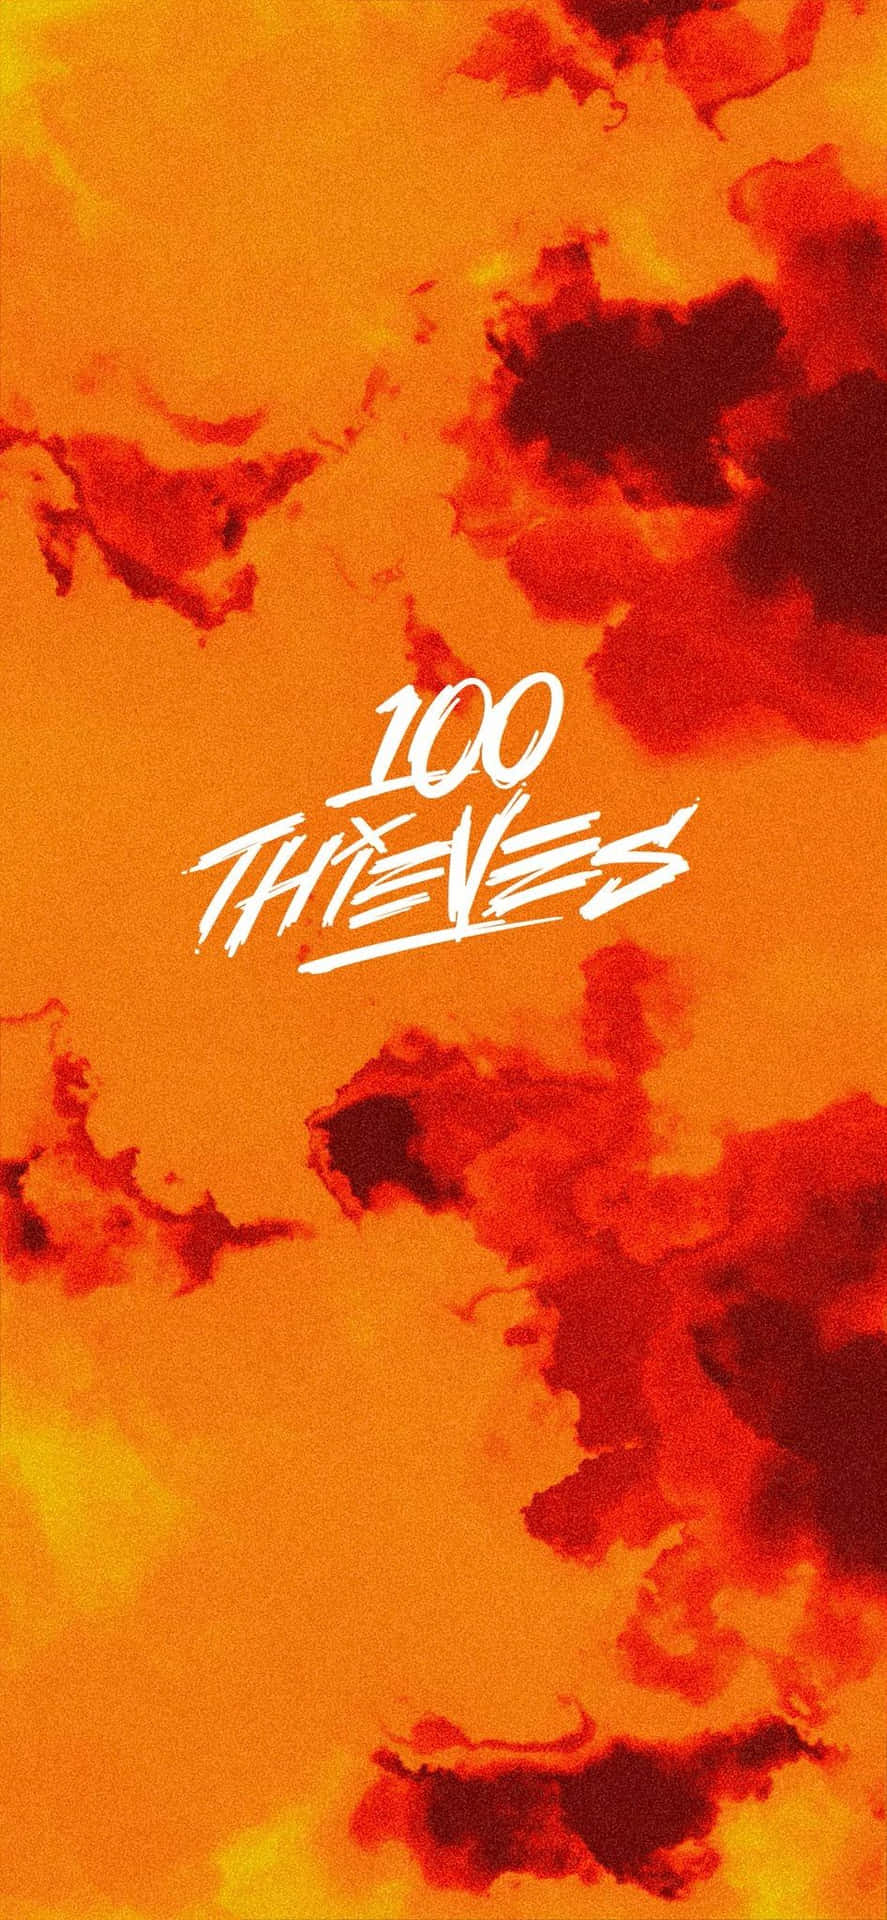 100 Thieves Logo On An Orange Background Wallpaper